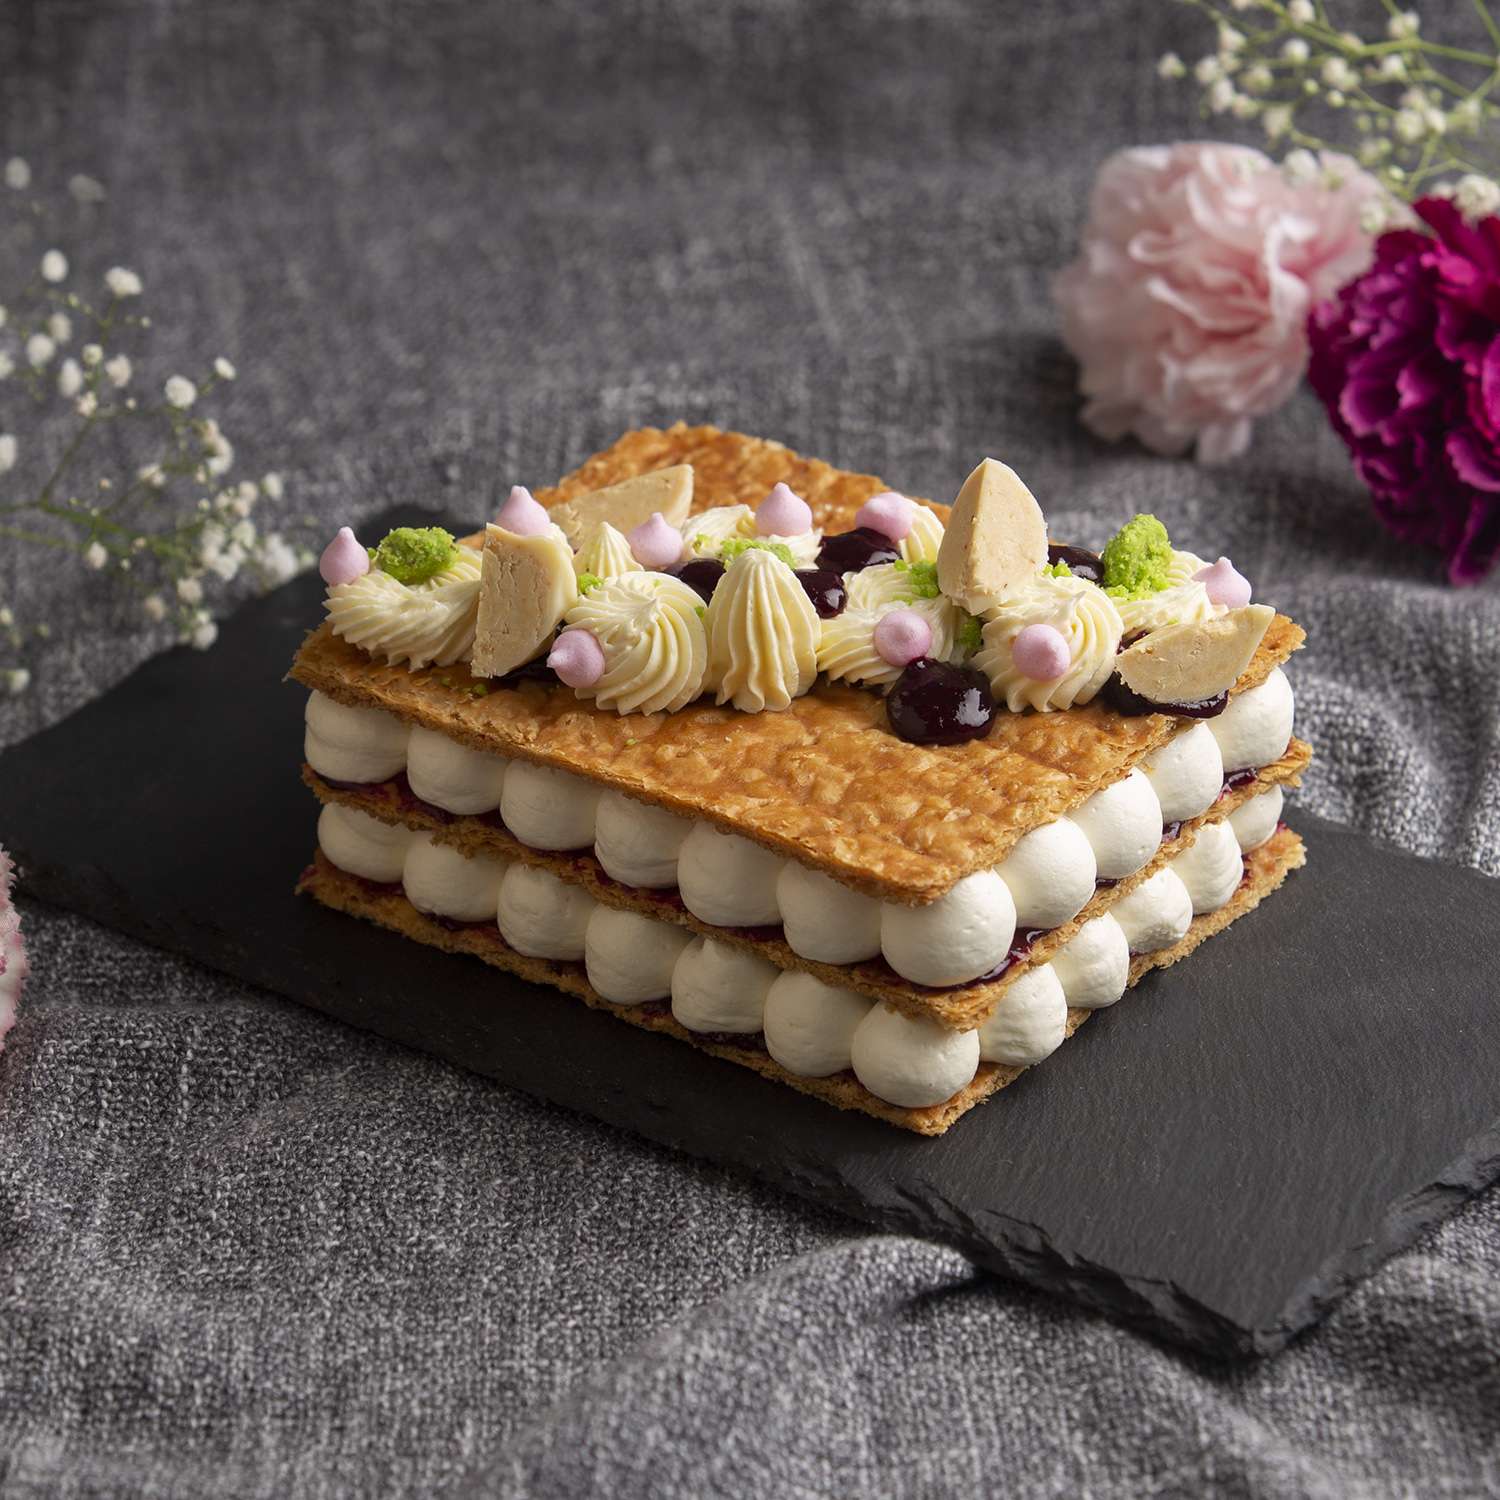 Papilles & Banana - Number Cake pour les 1an d'Agathe façon Trianon # numbercake #1an #anniversaire #trianon #chocolat #bebefille #Agathe  #meringue #patisserie #dessert #Toulouse #cakedesign #papillesetbanana |  Facebook